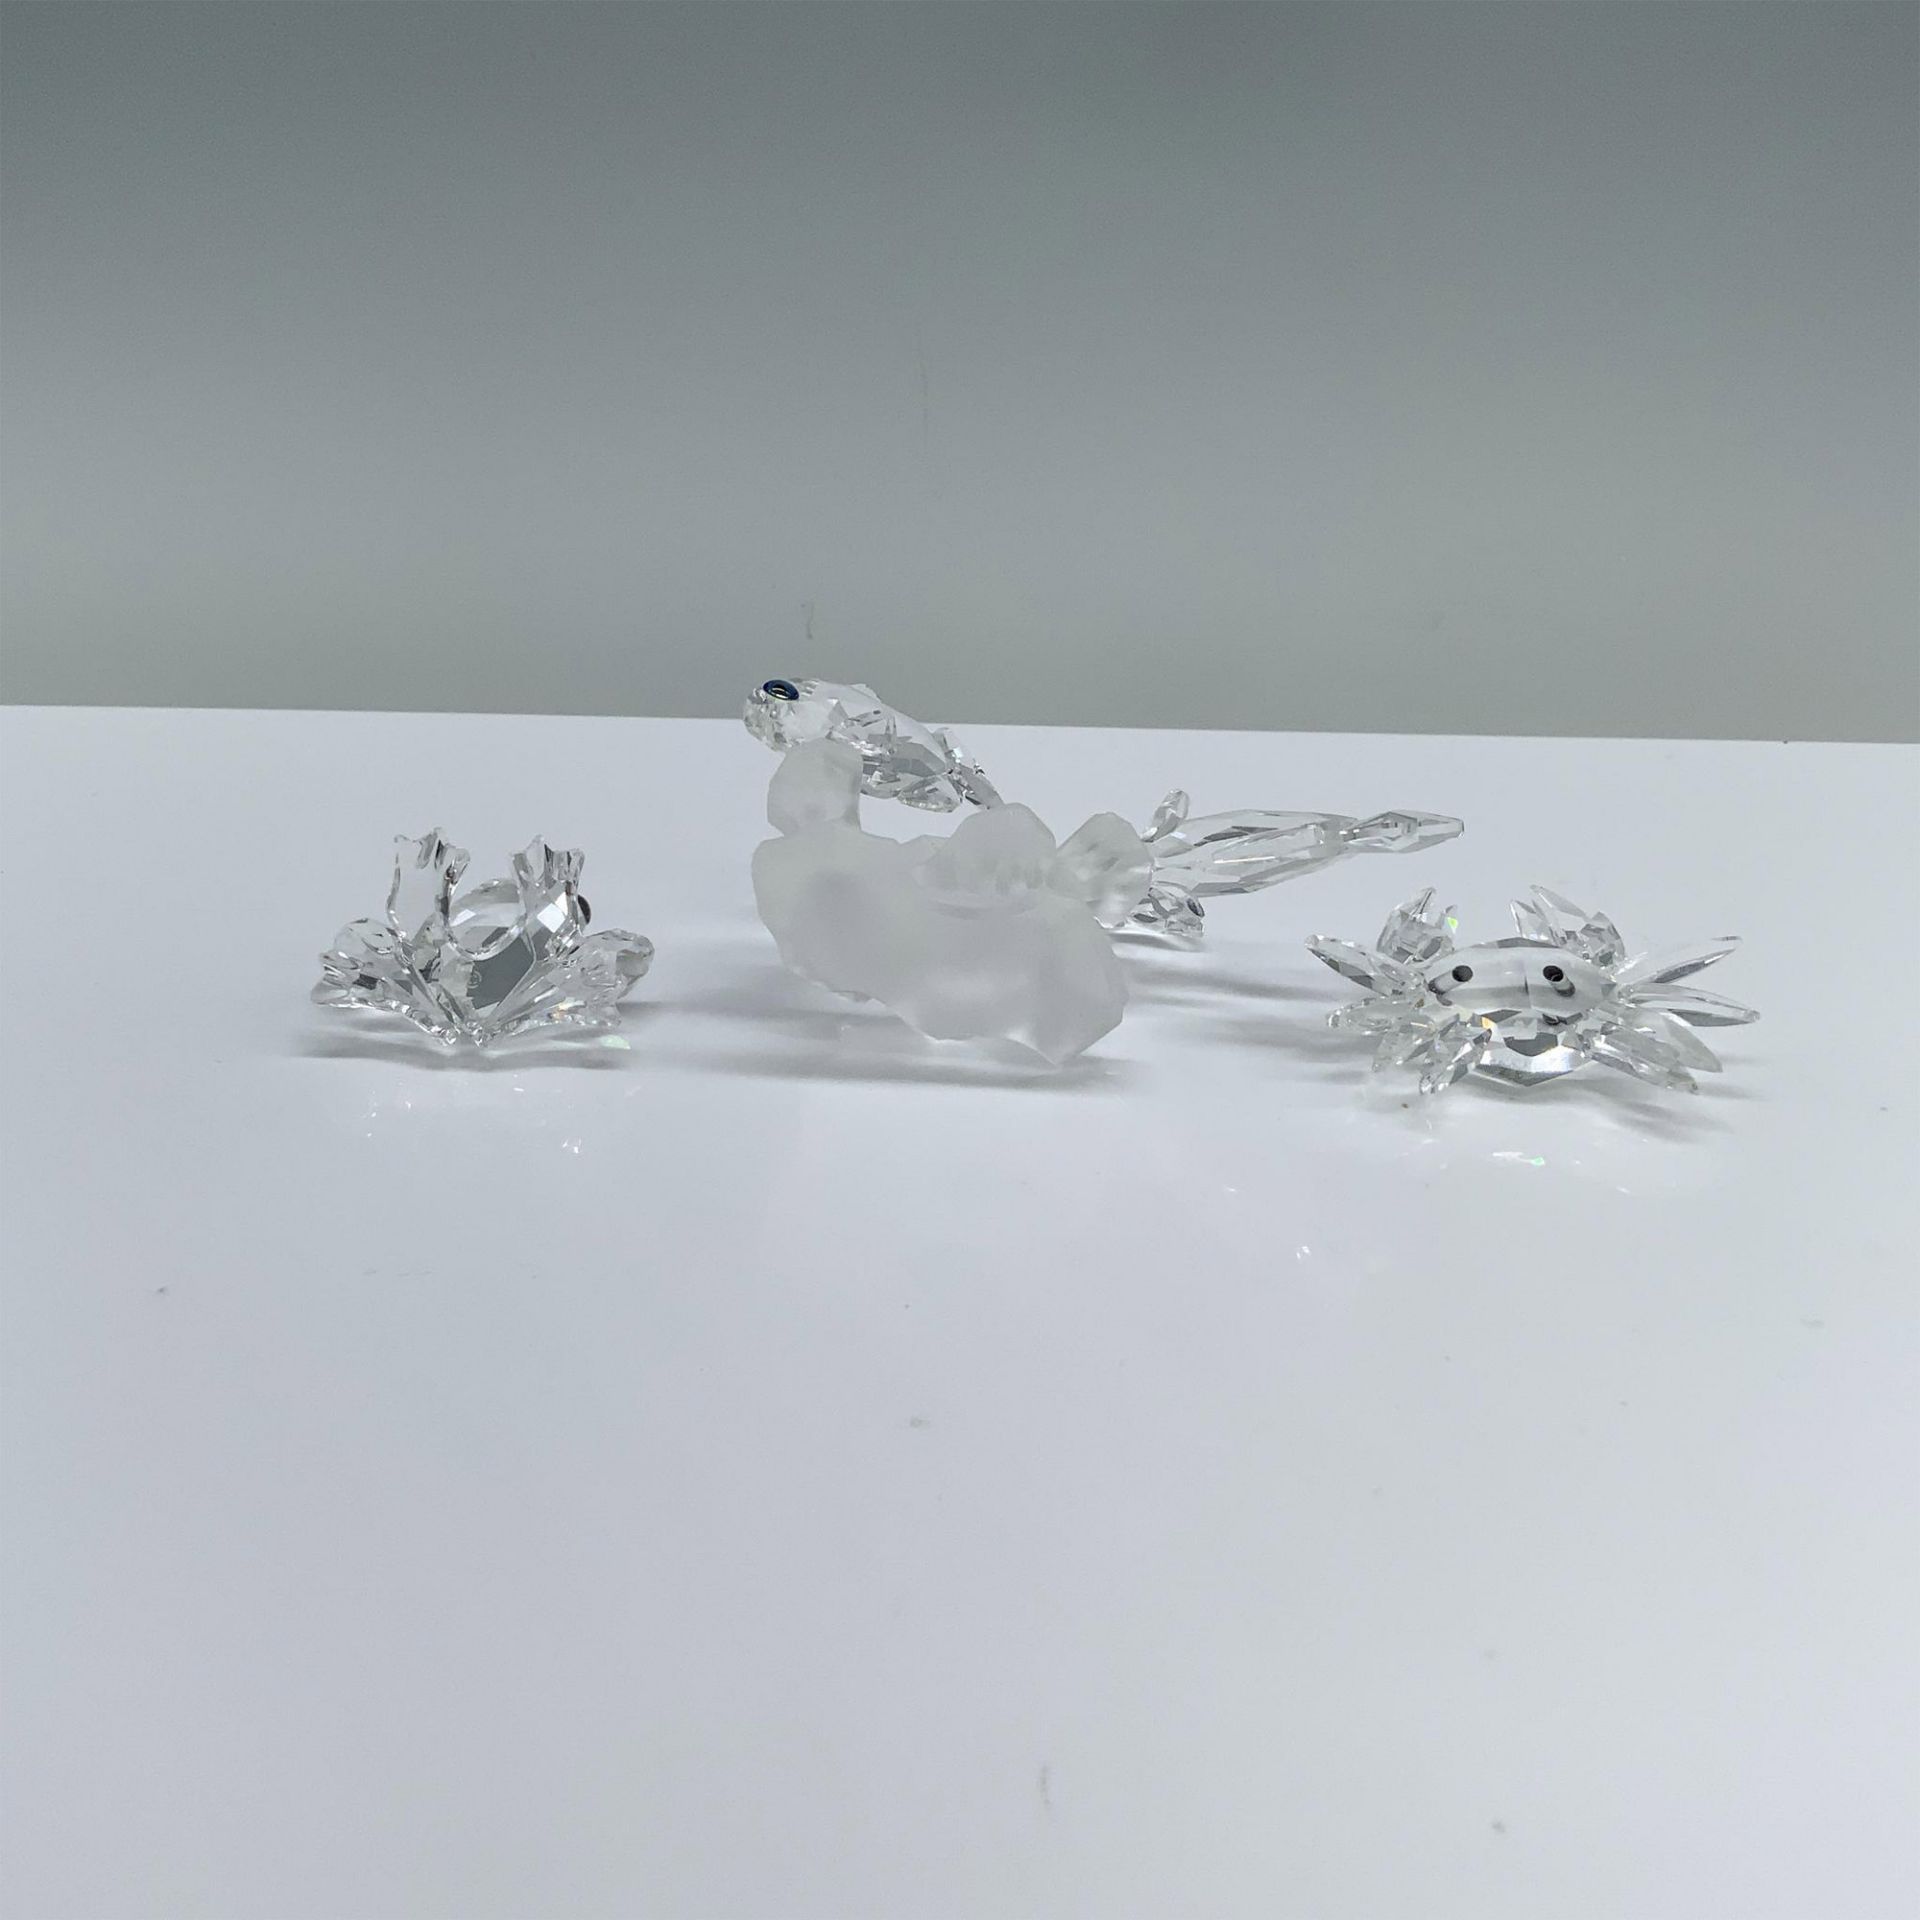 3pc Swarovski Crystal Figurines, Aquatic Animal Motif - Image 3 of 3